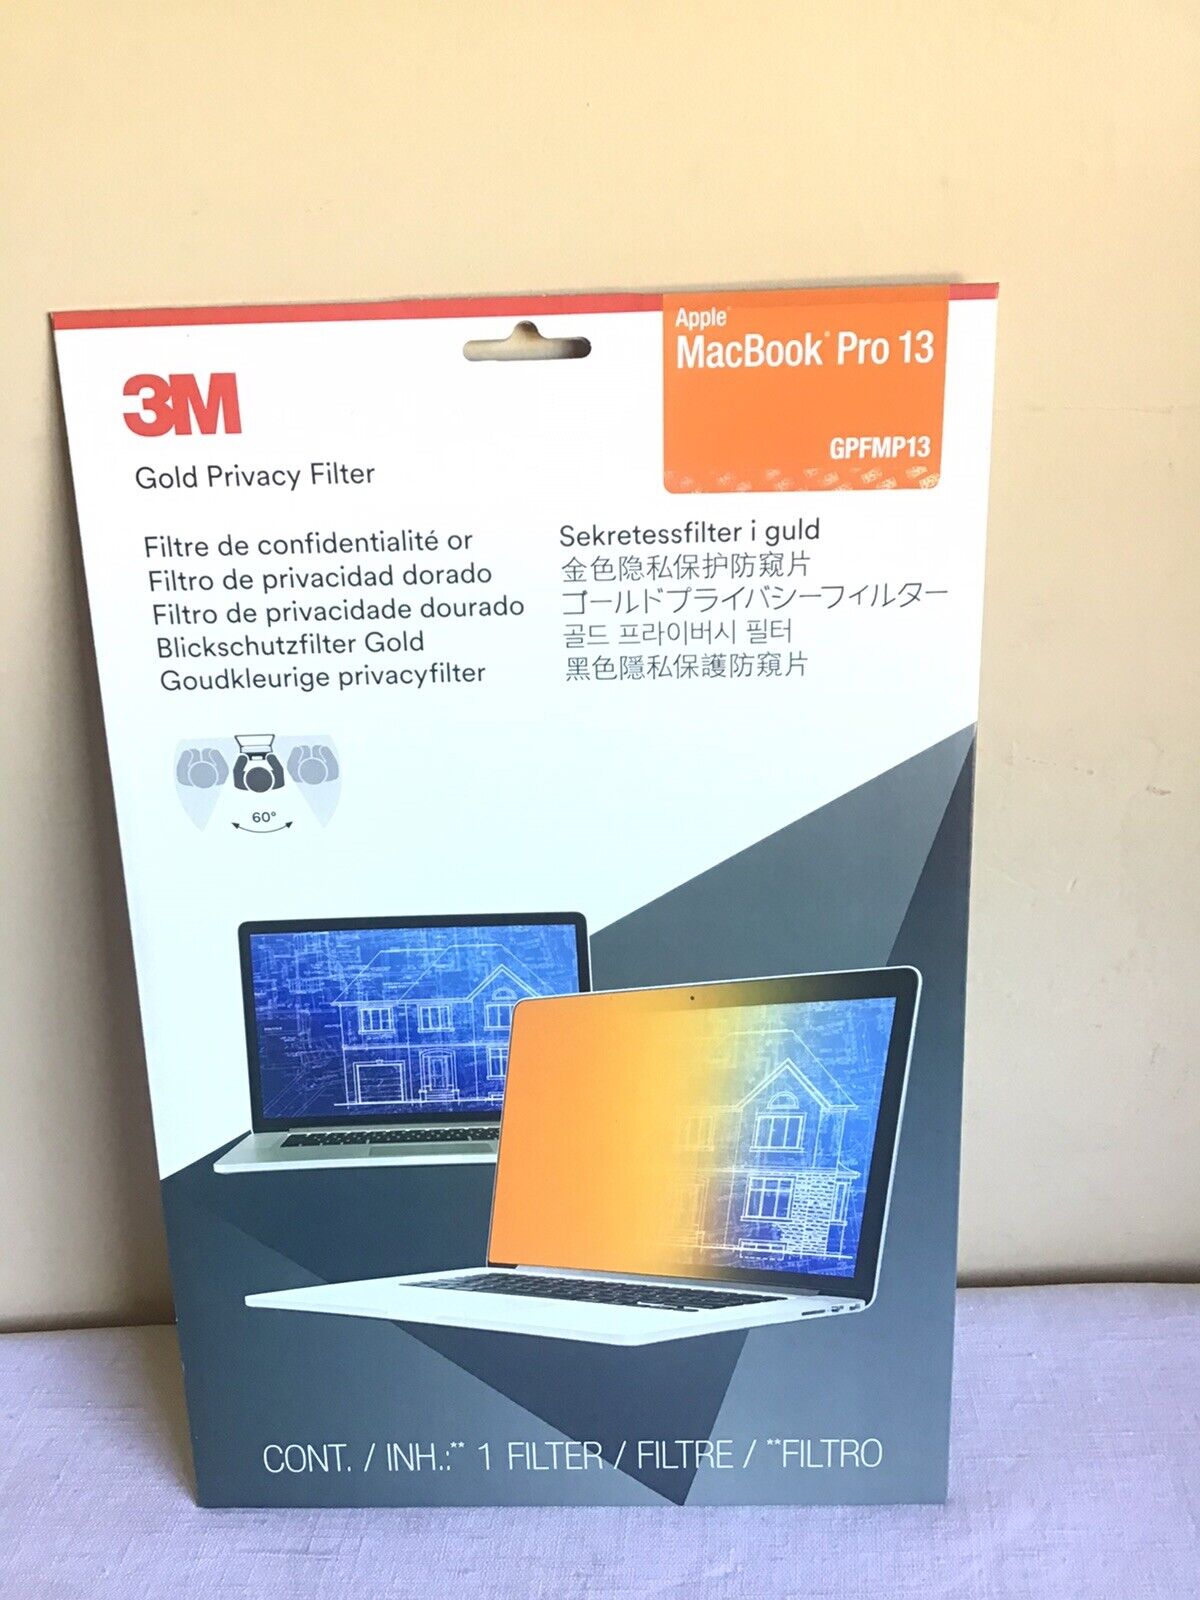 Brand New 3M Apple MacBook Pro 13 Gold 60 Degree Privacy Filter Model# GPFMP13